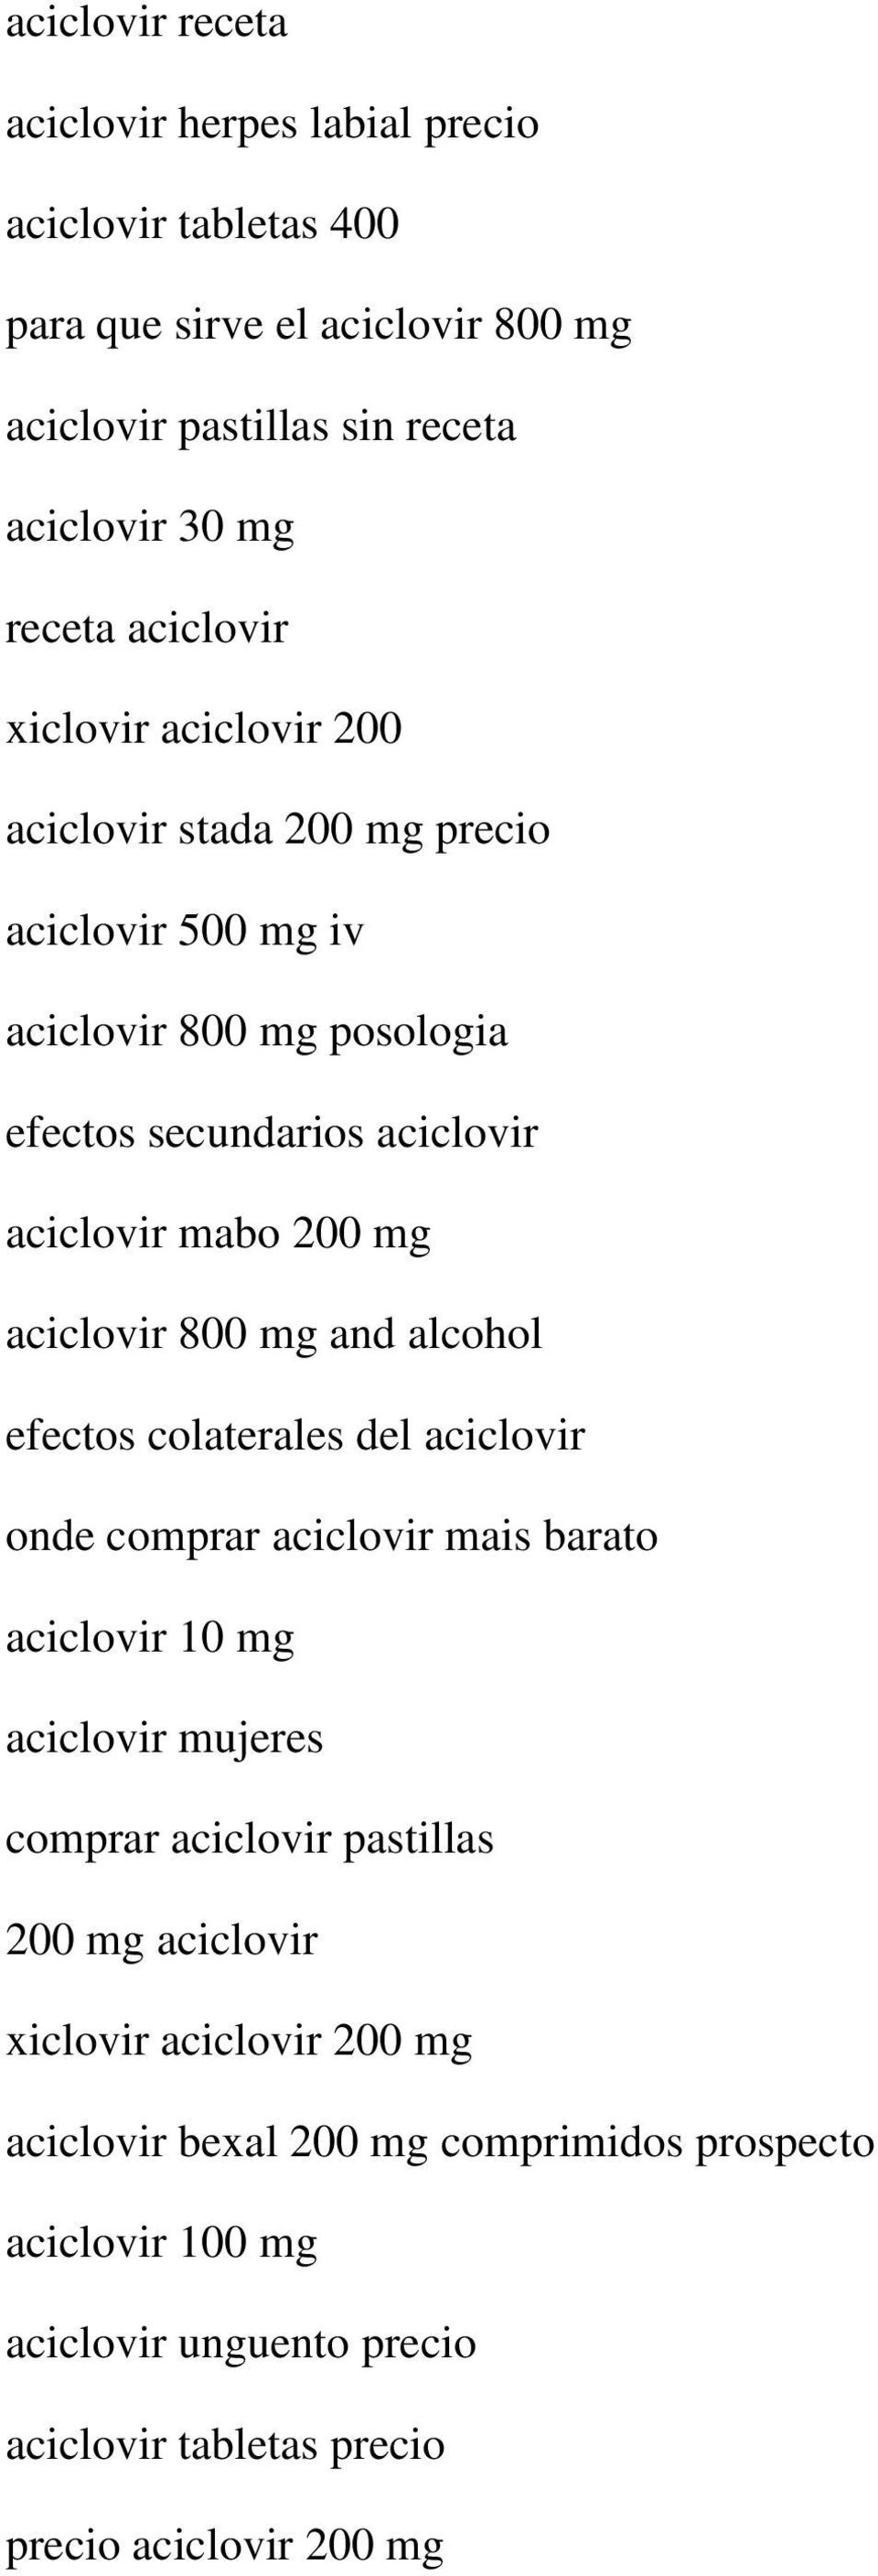 aciclovir tablets 600mg